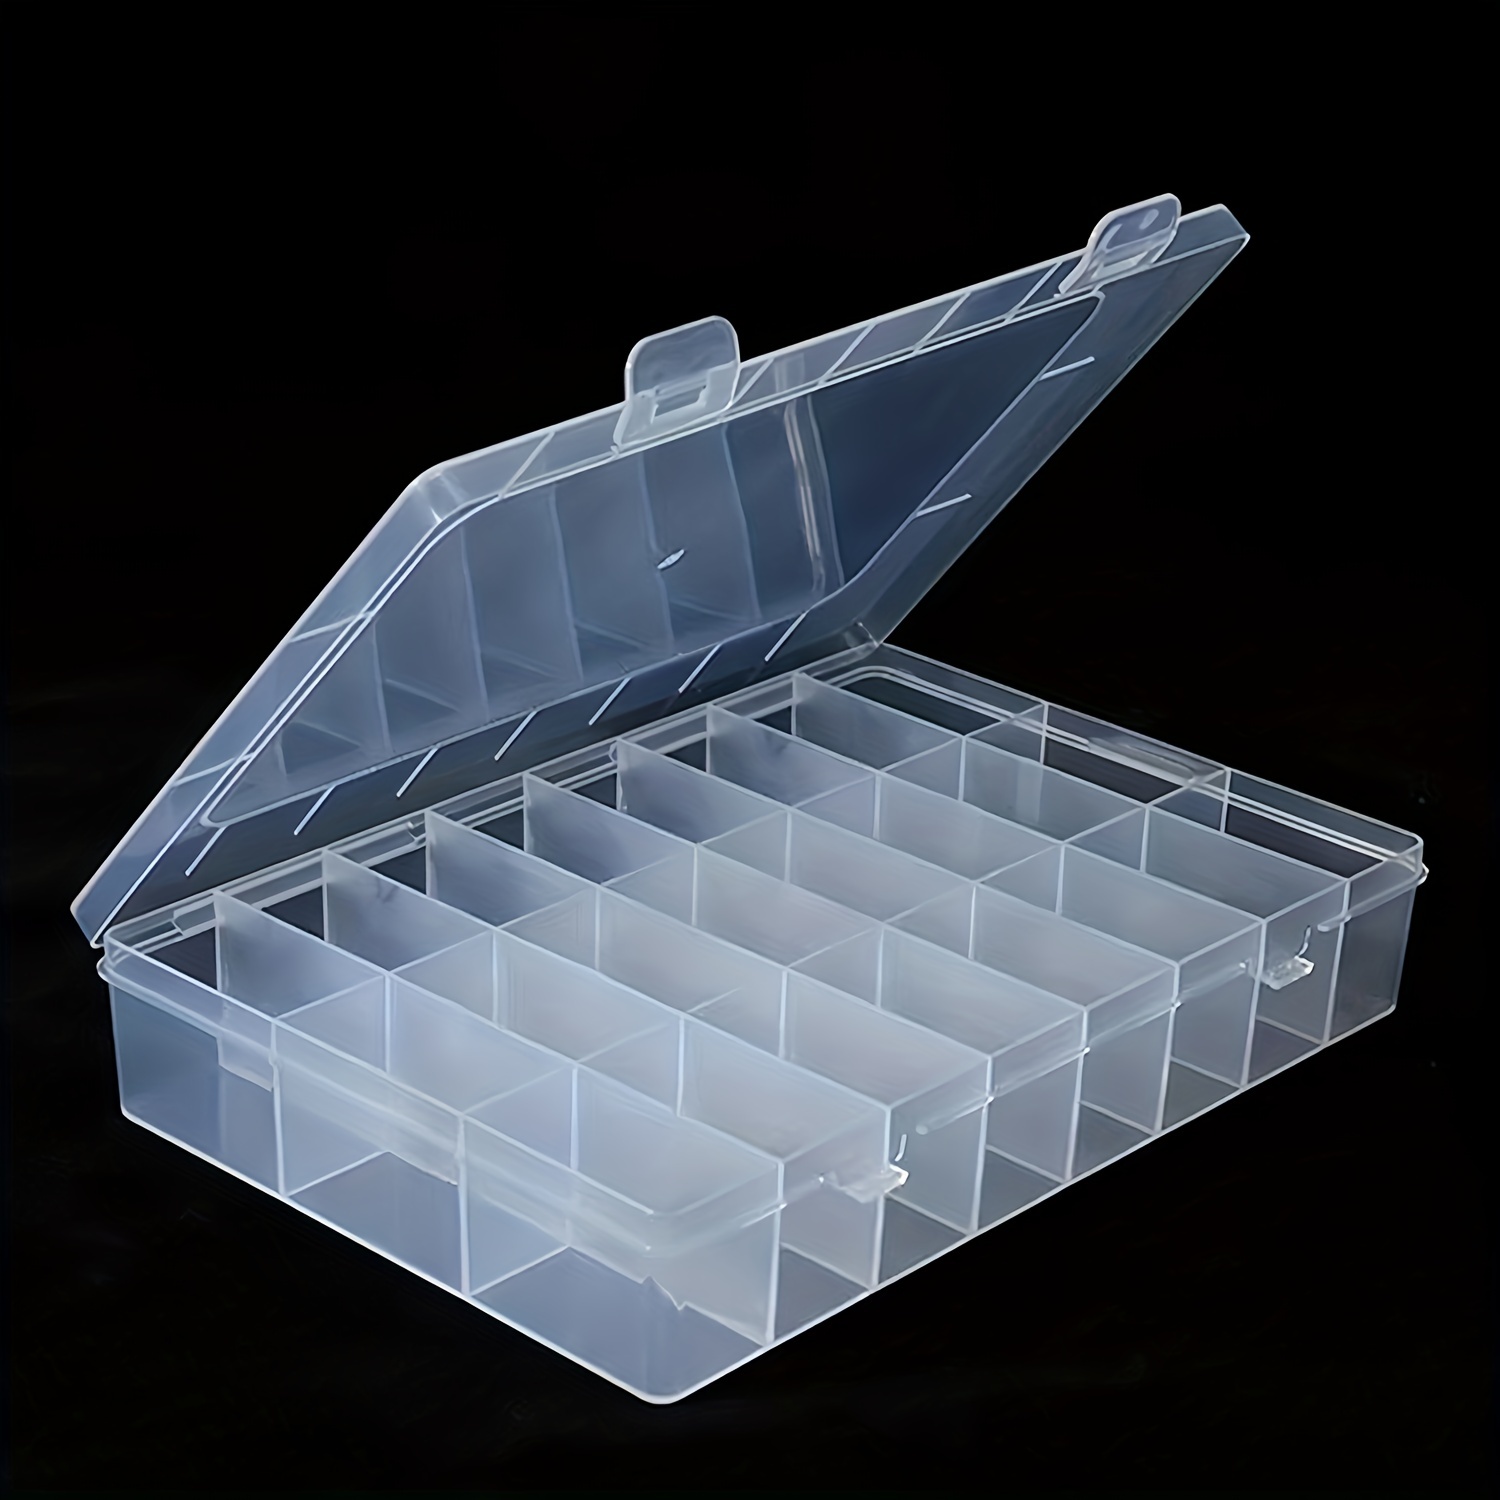 24 Grid Plastic Organizer Box with Dividers Jewelry Storage